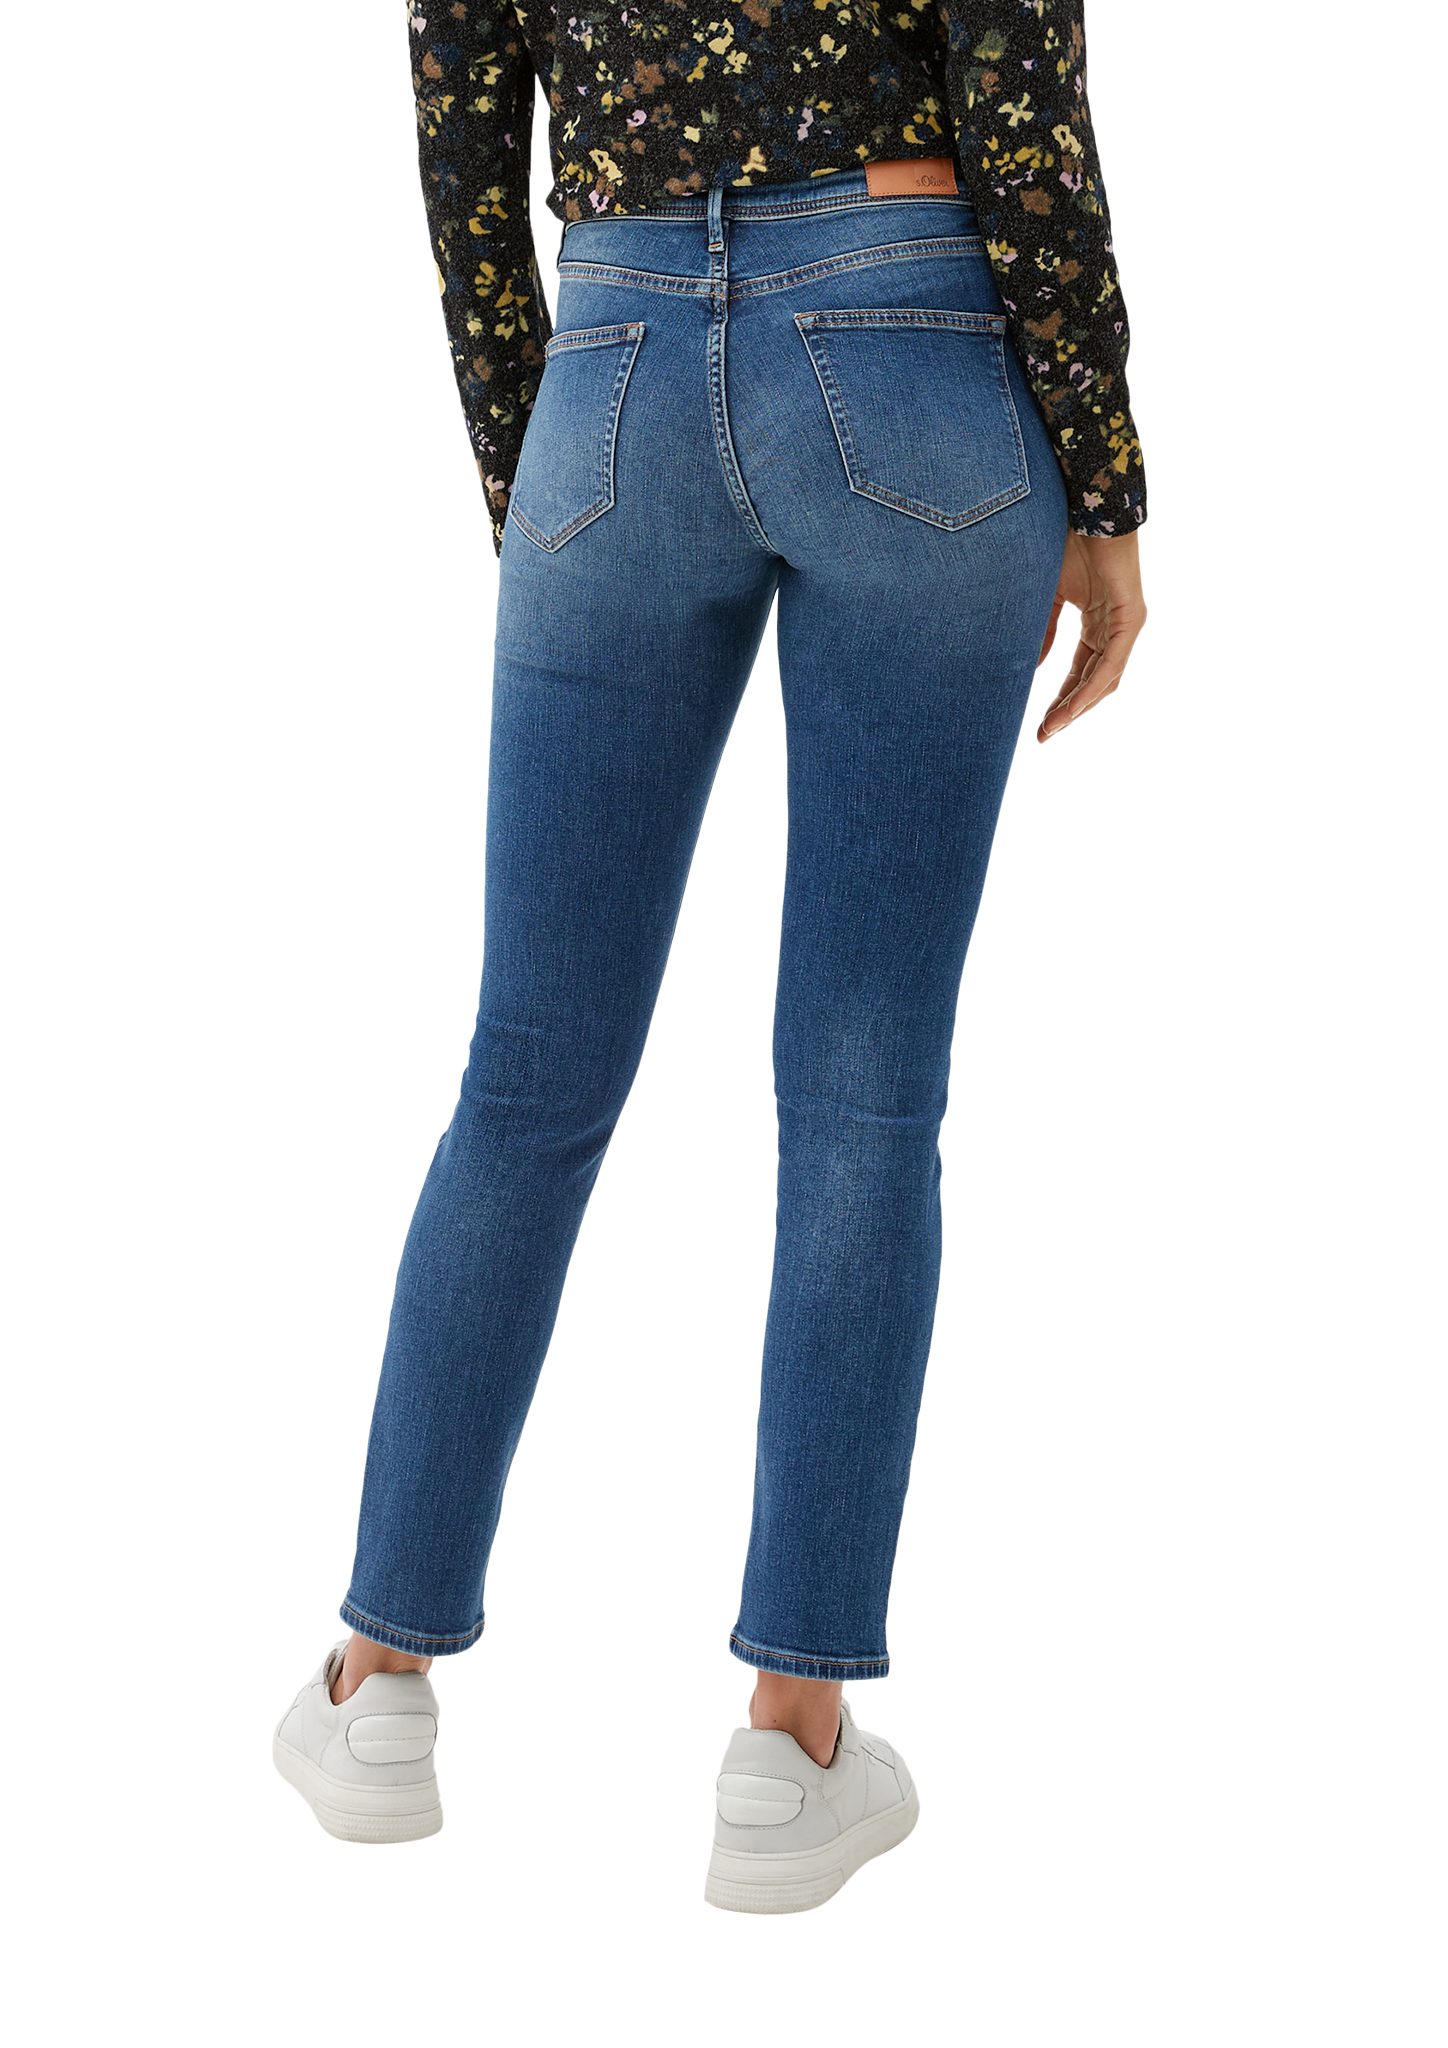 / / Fit Rise Mid s.Oliver Slim Slim 5-Pocket-Jeans himmelblau Leg / Jeans Betsy Waschung